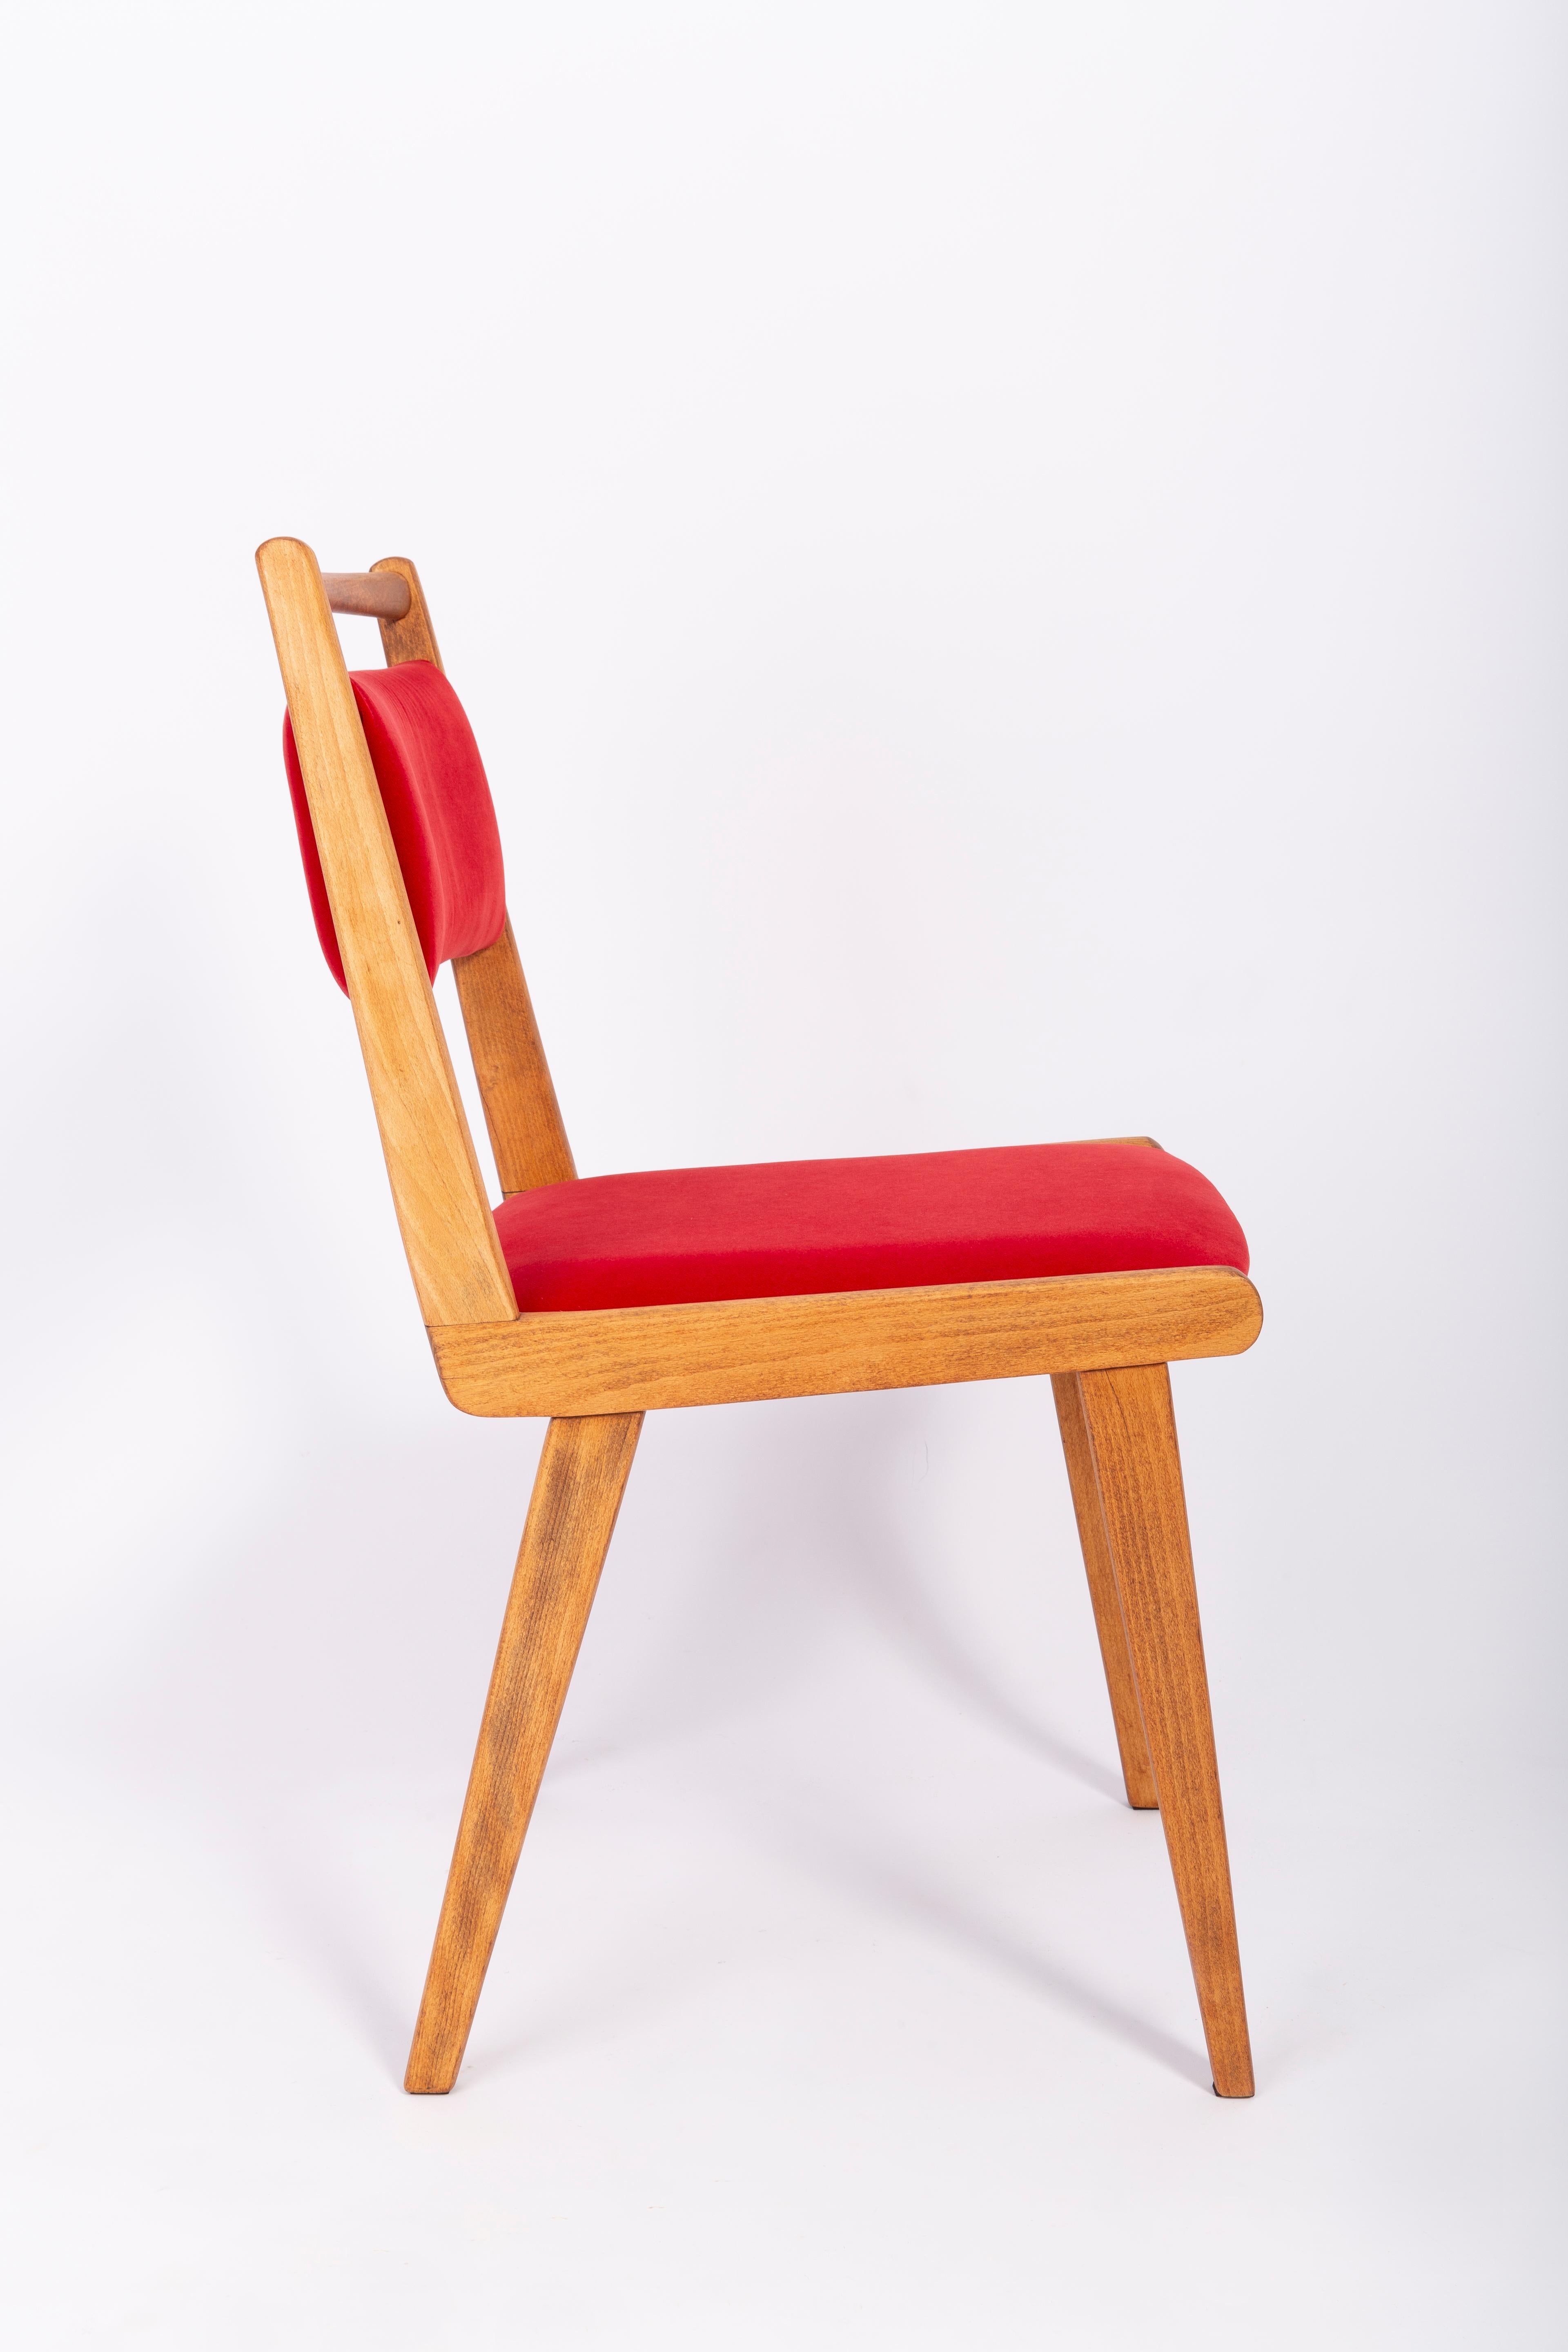 Polish Set of Twelve 20th Century Red Velvet Chairs, by Rajmund Halas, Poland, 1960s For Sale